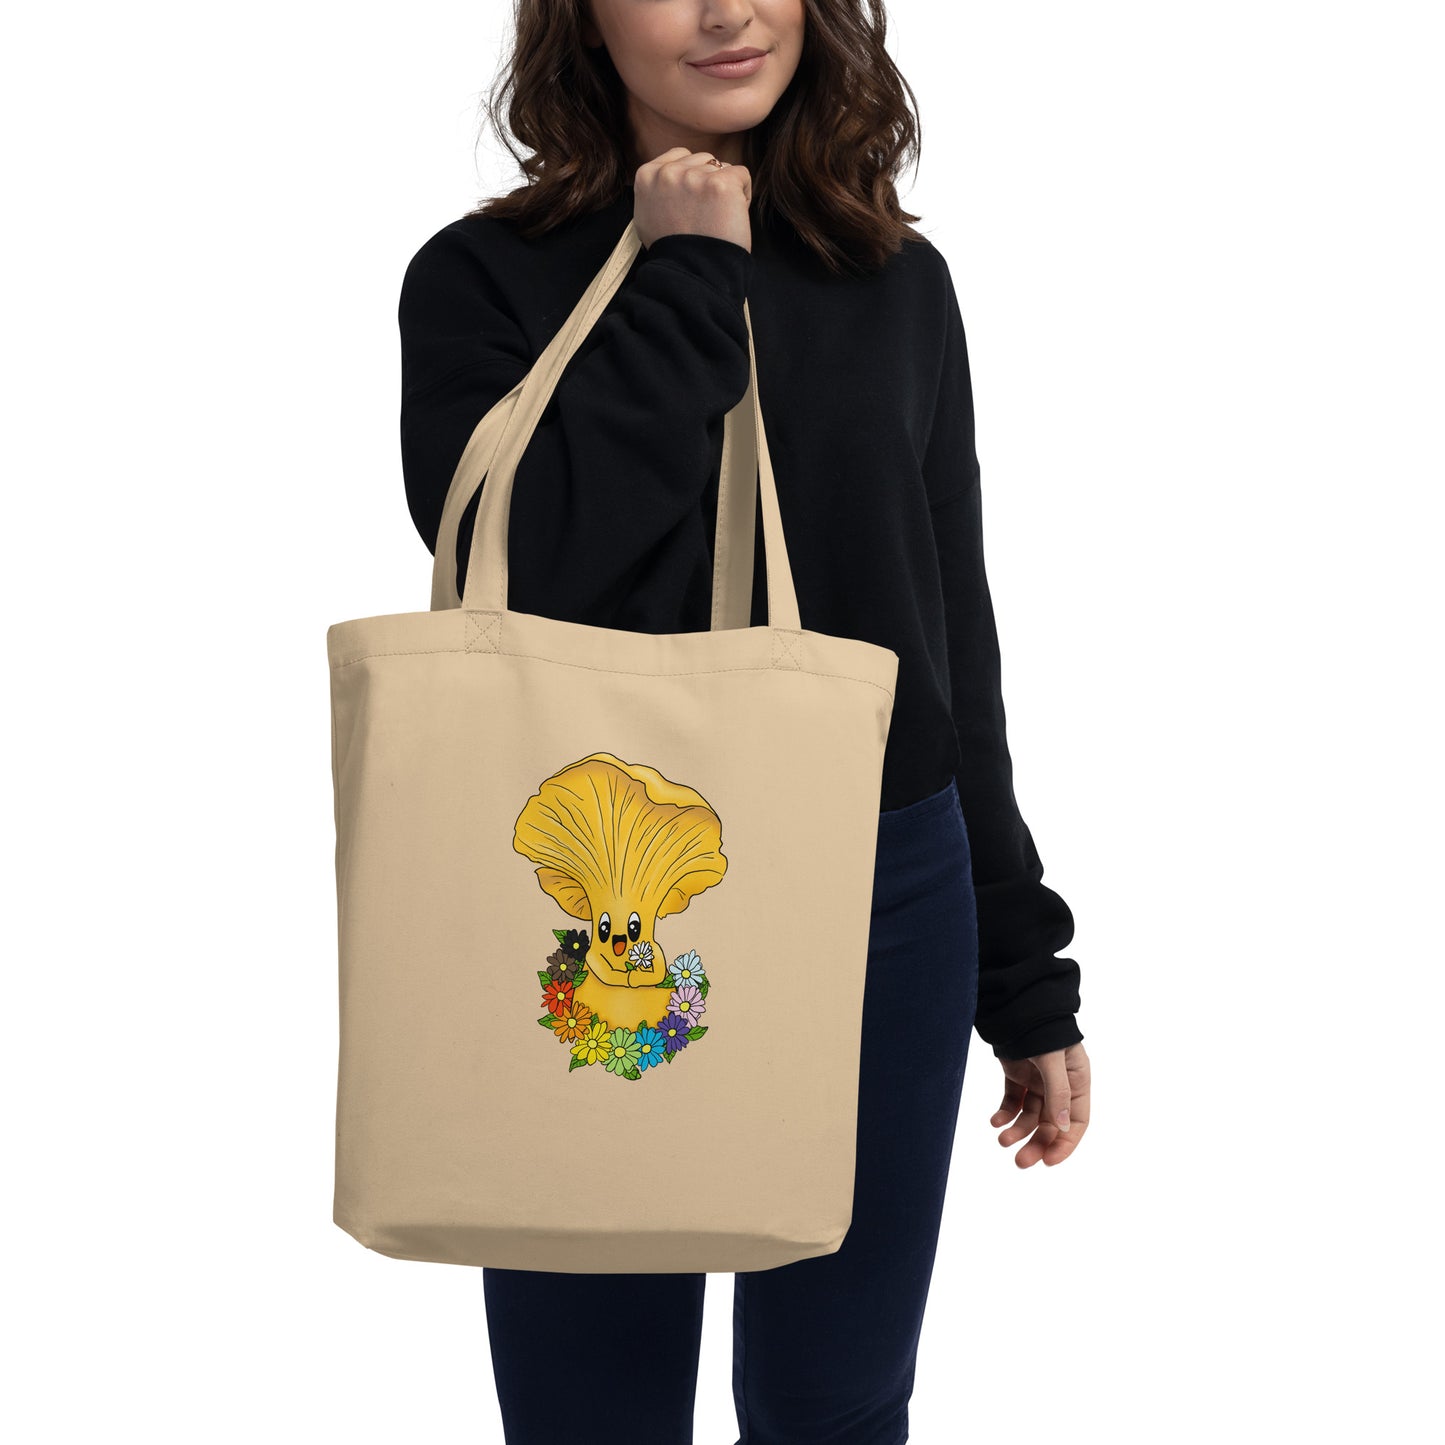 Chanterelle Mushroom w/Pride Rainbow Flowers | Eco-Friendly Tote Bag | Adorable Pride Mushroom Artwork